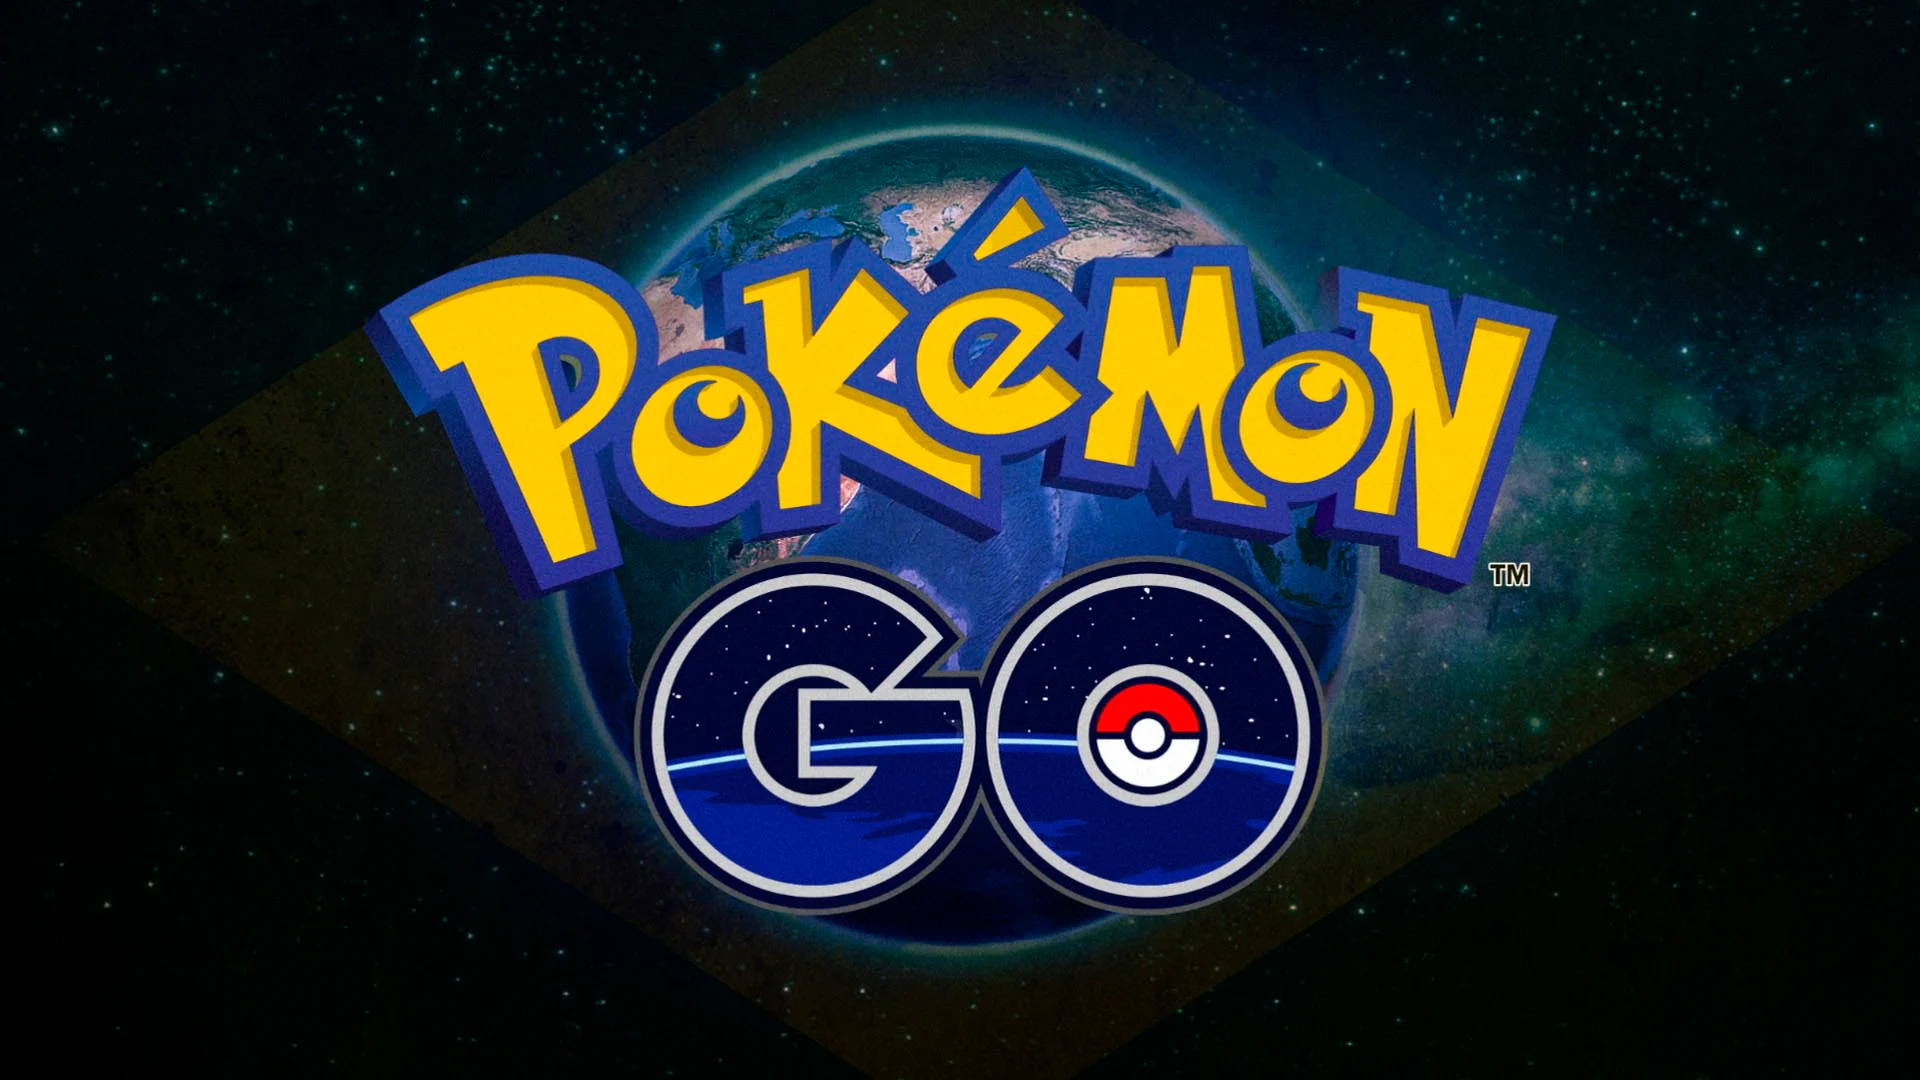 Pokemon go: jogo se adapta para a quarentena! | 404c94b5 pokemon go brasil | married games pokémon | pokémon | pokémon go